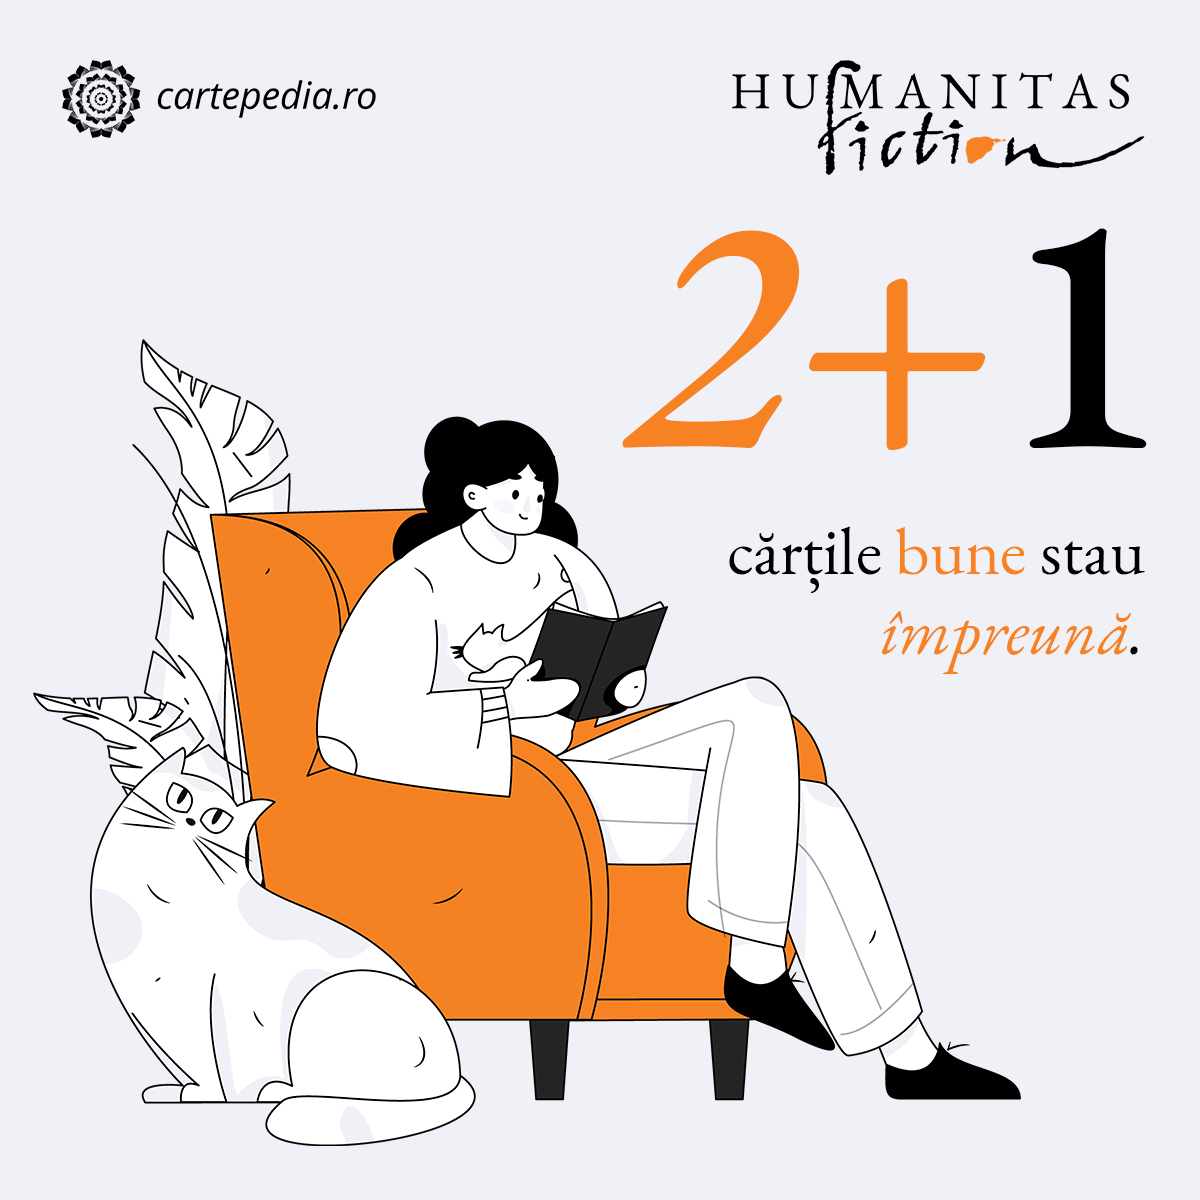 Humanitas Fiction 2+1